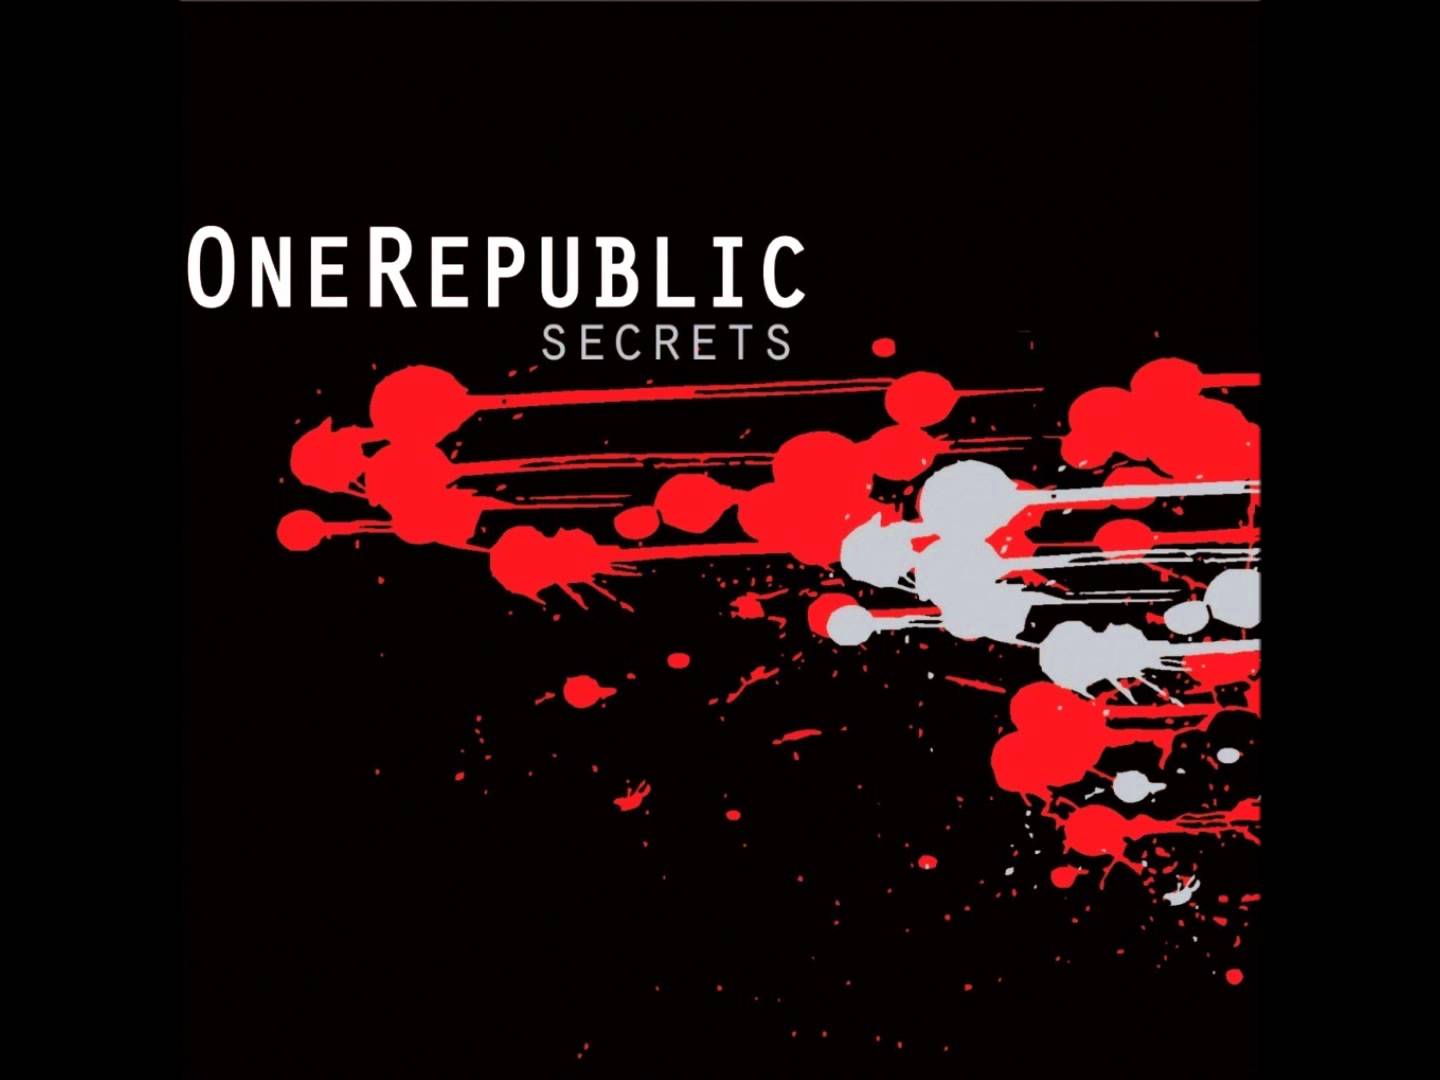 All my secrets away | One Republic